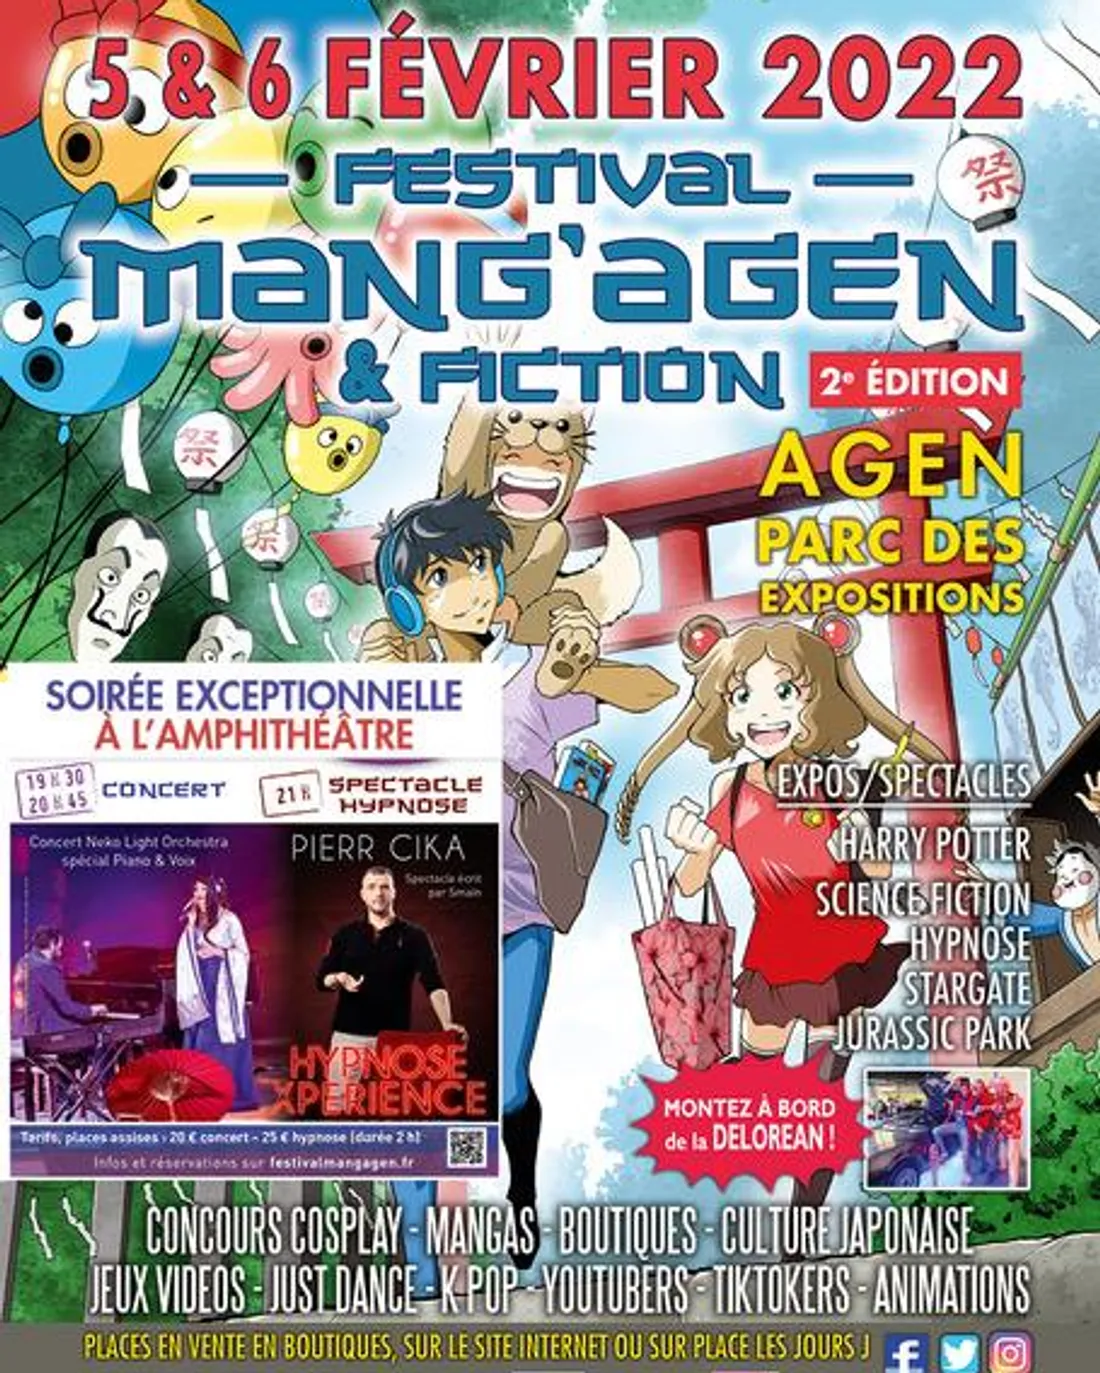 Manga Agen 2